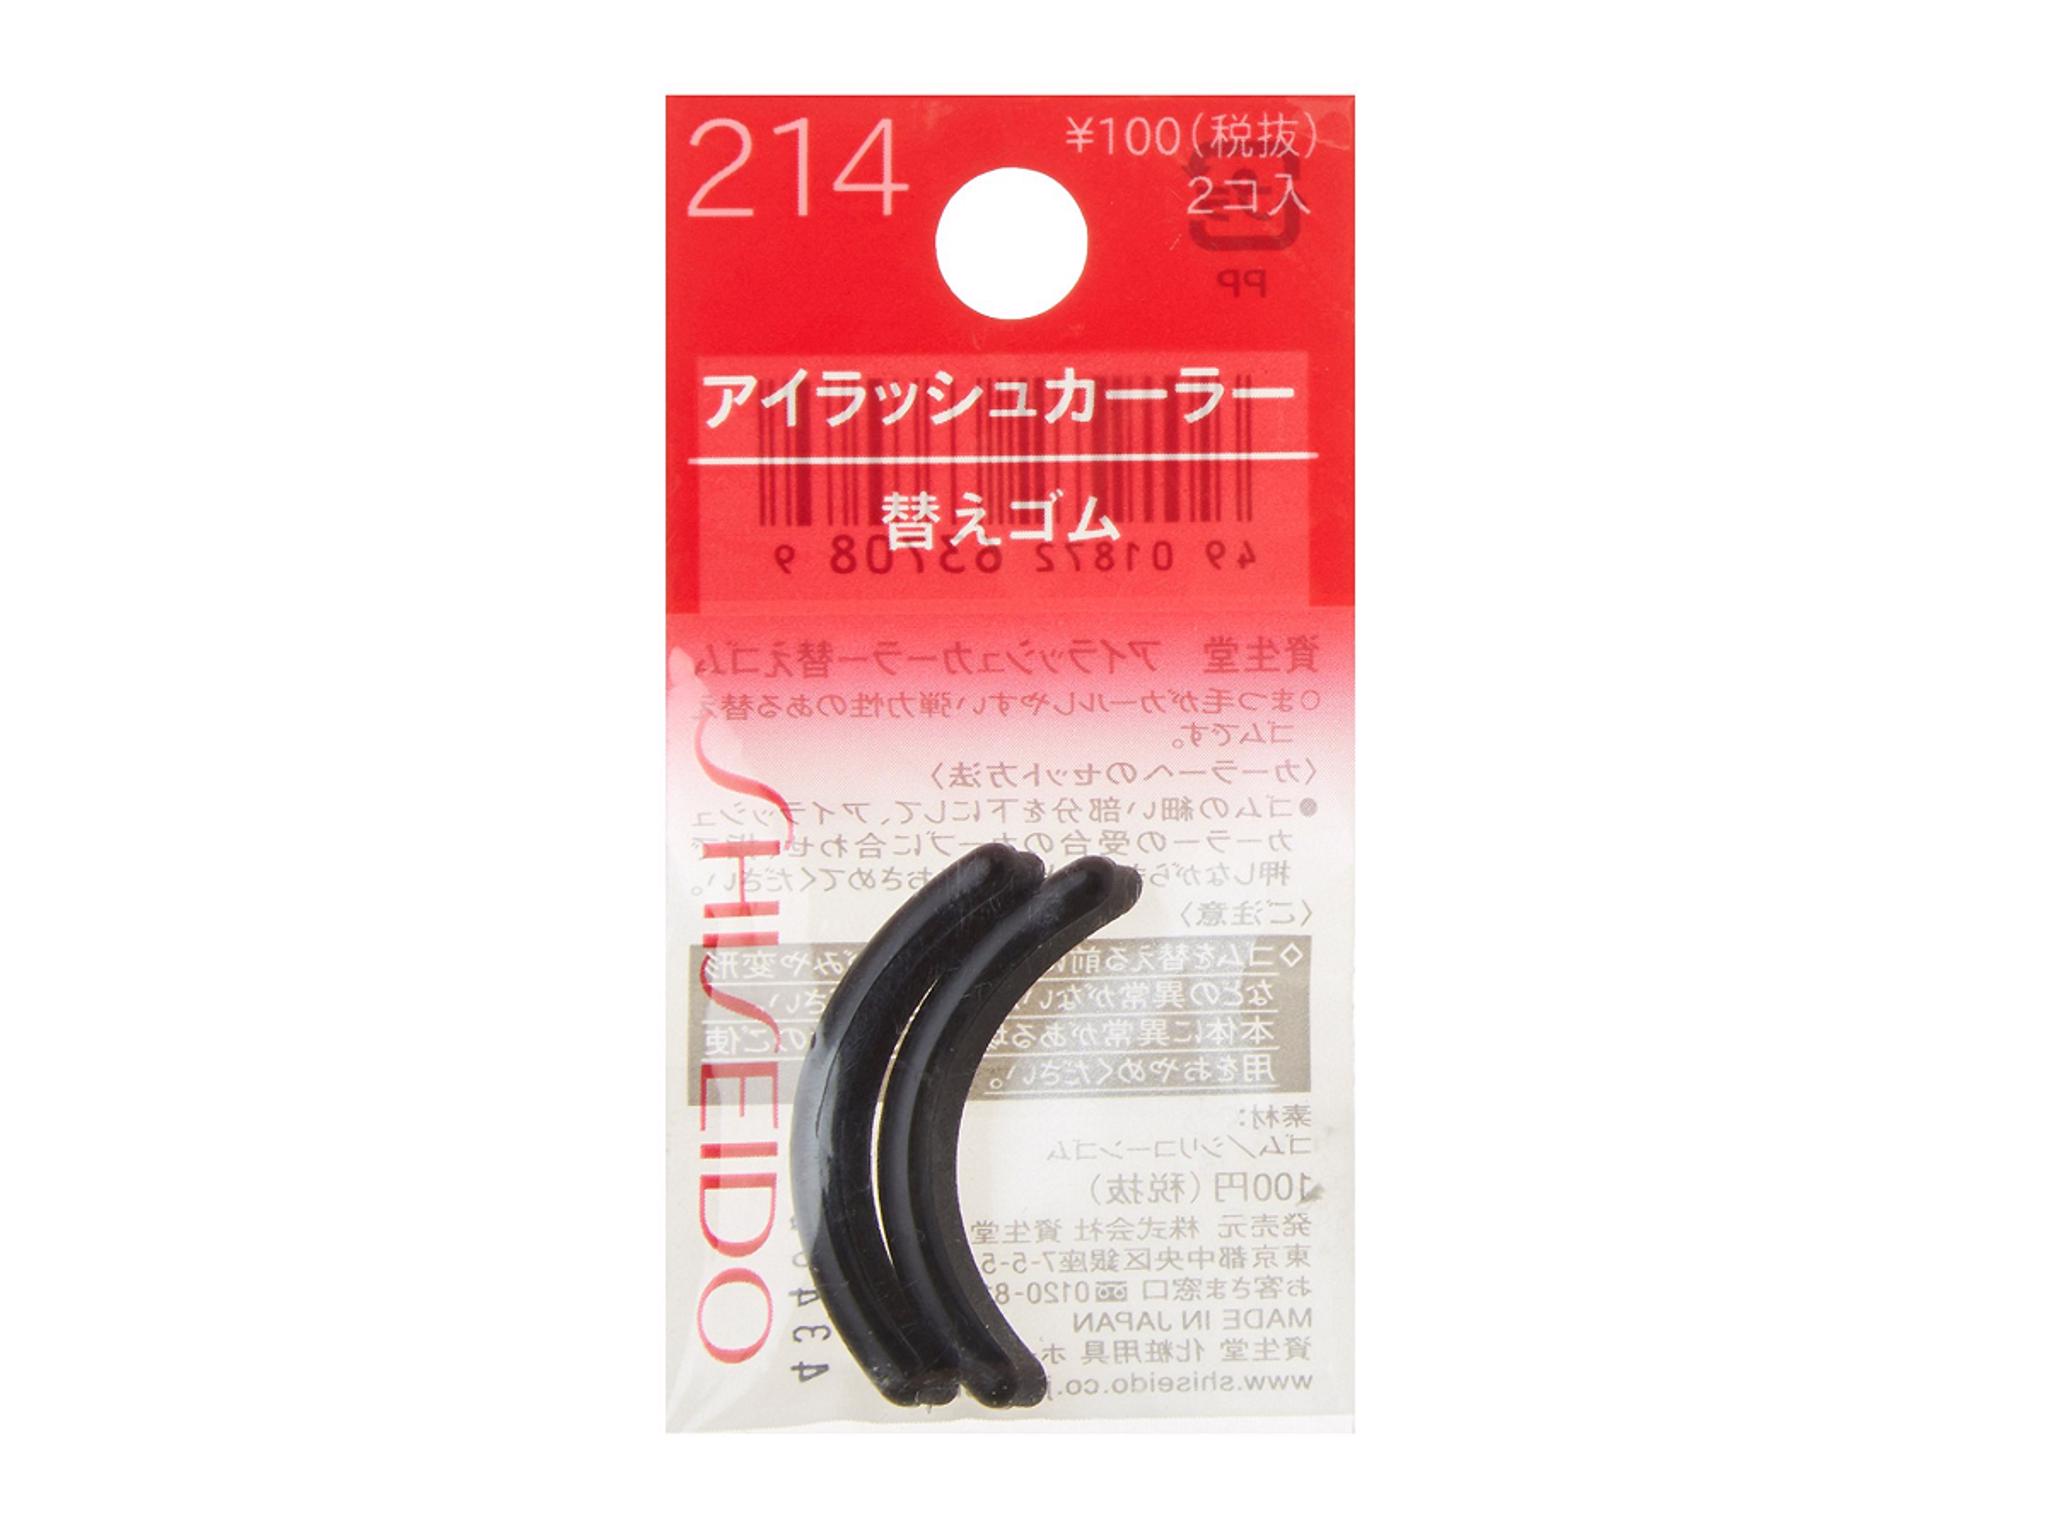 SHISEIDO - Eyelash Curler Replacement Rubber Pad (2pcs) - 214 1333